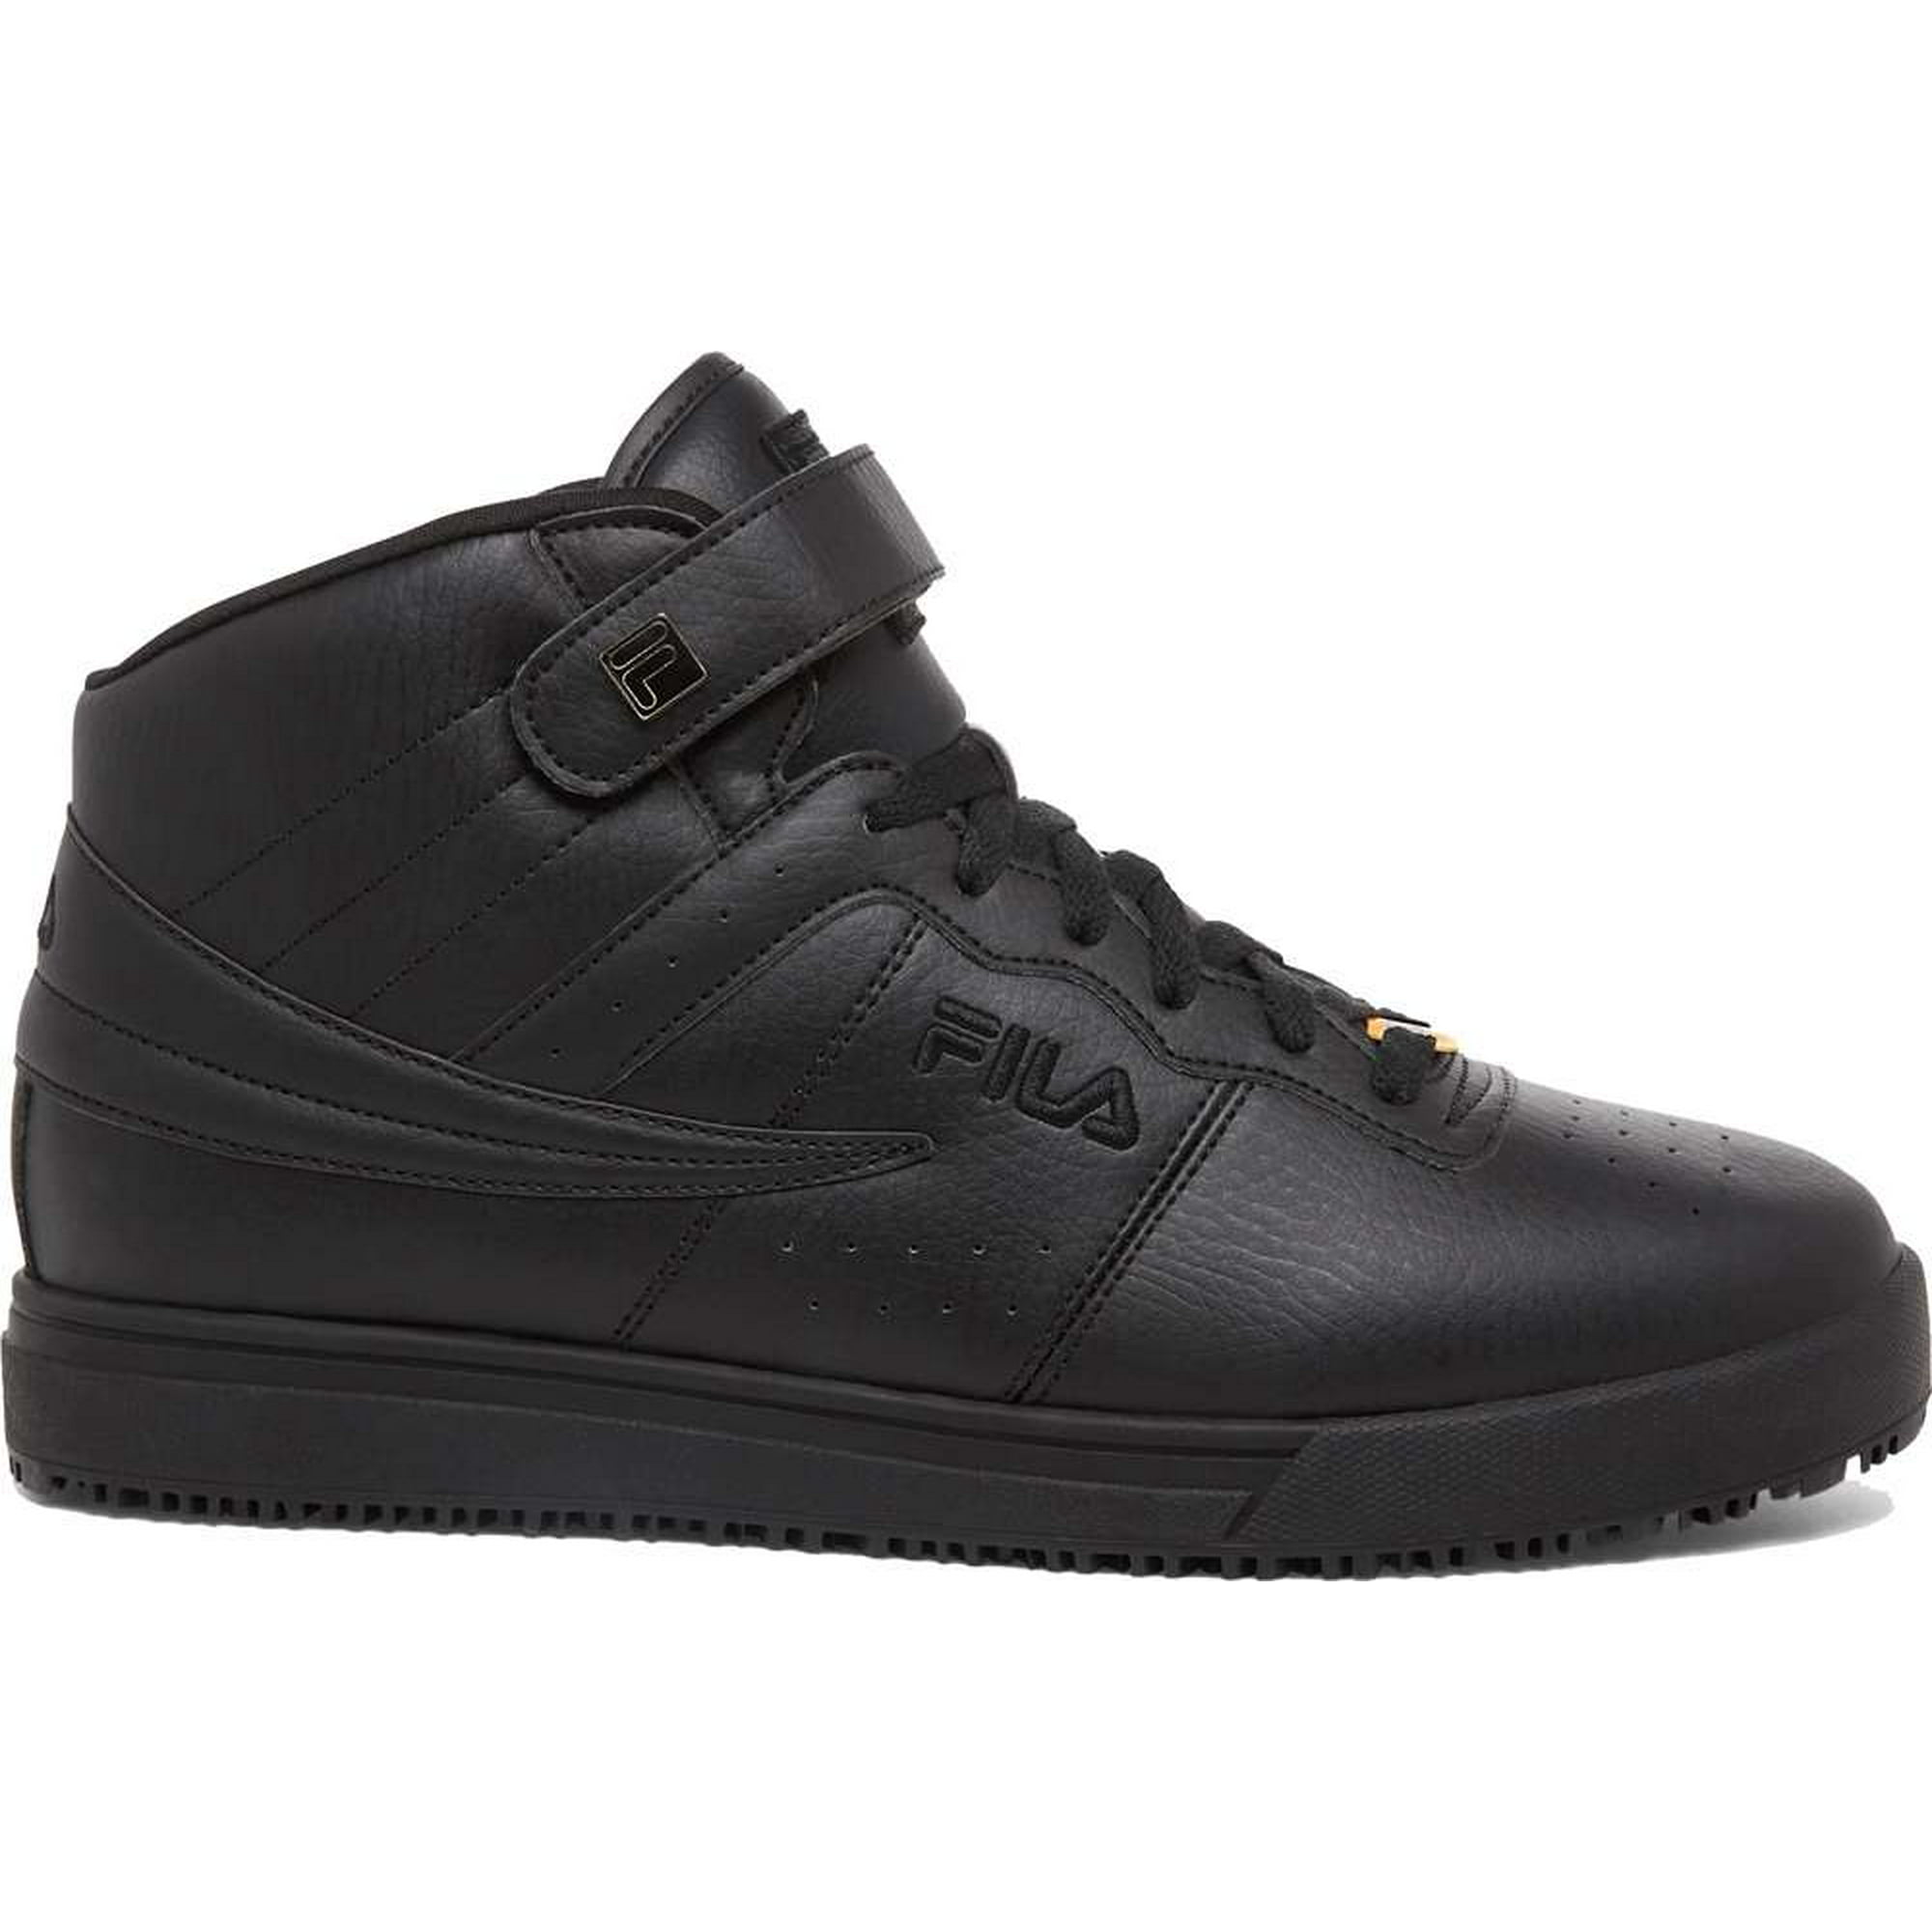 Mens Fila 13 Shoe Size: Black - Black - Black Fashion Sneakers Walmart.com